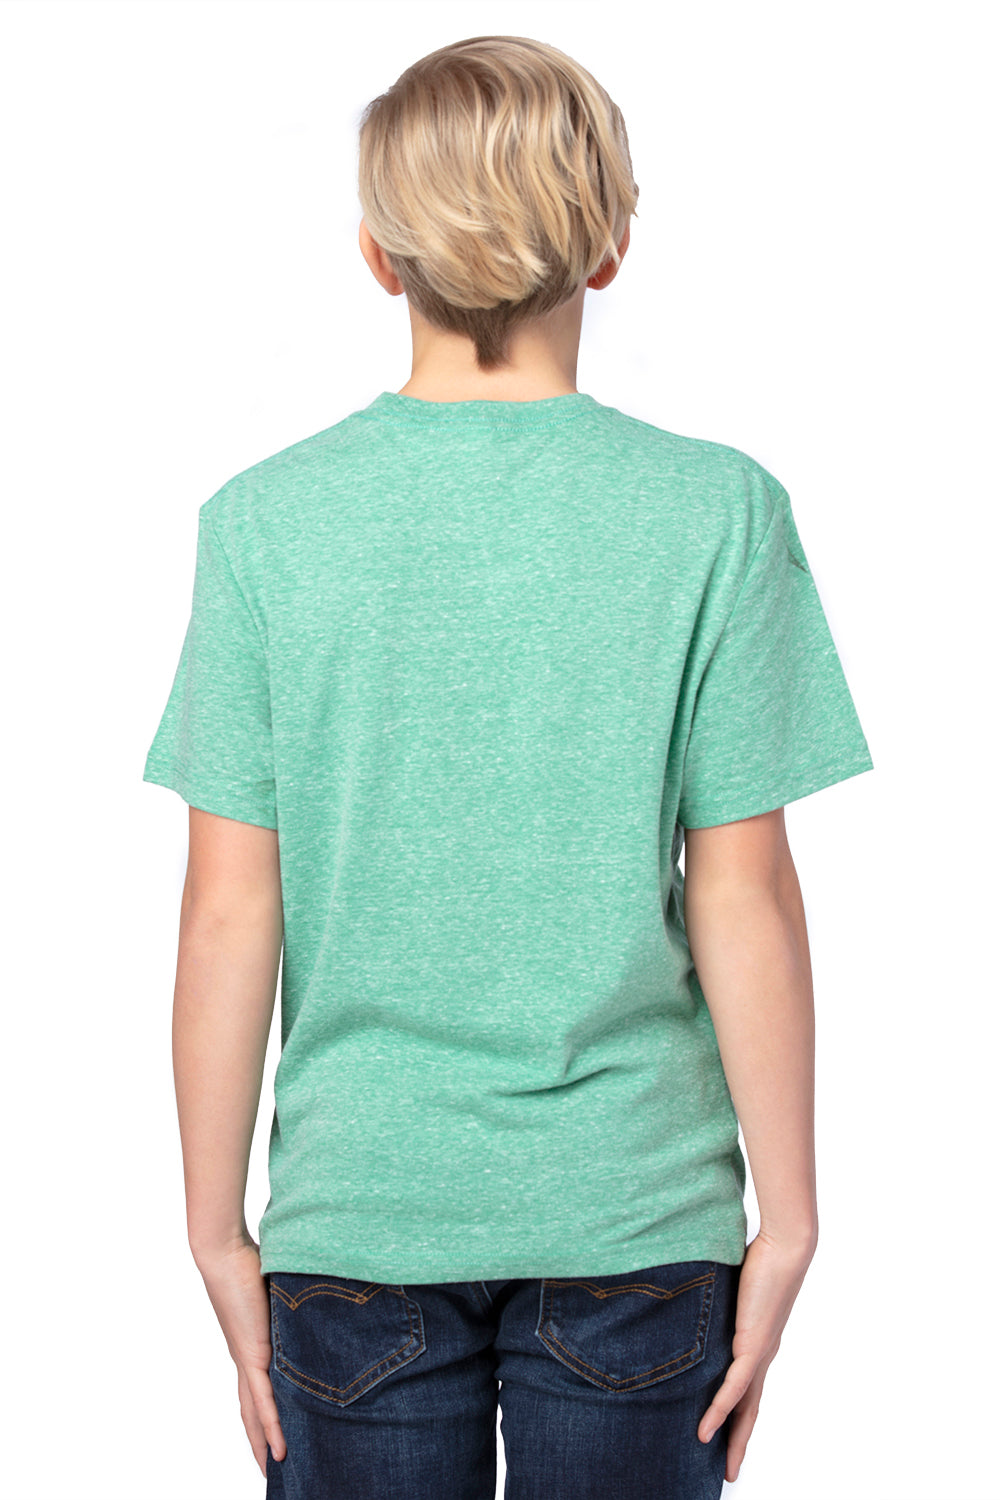 Threadfast Apparel 602A Youth Short Sleeve Crewneck T-Shirt Green Back